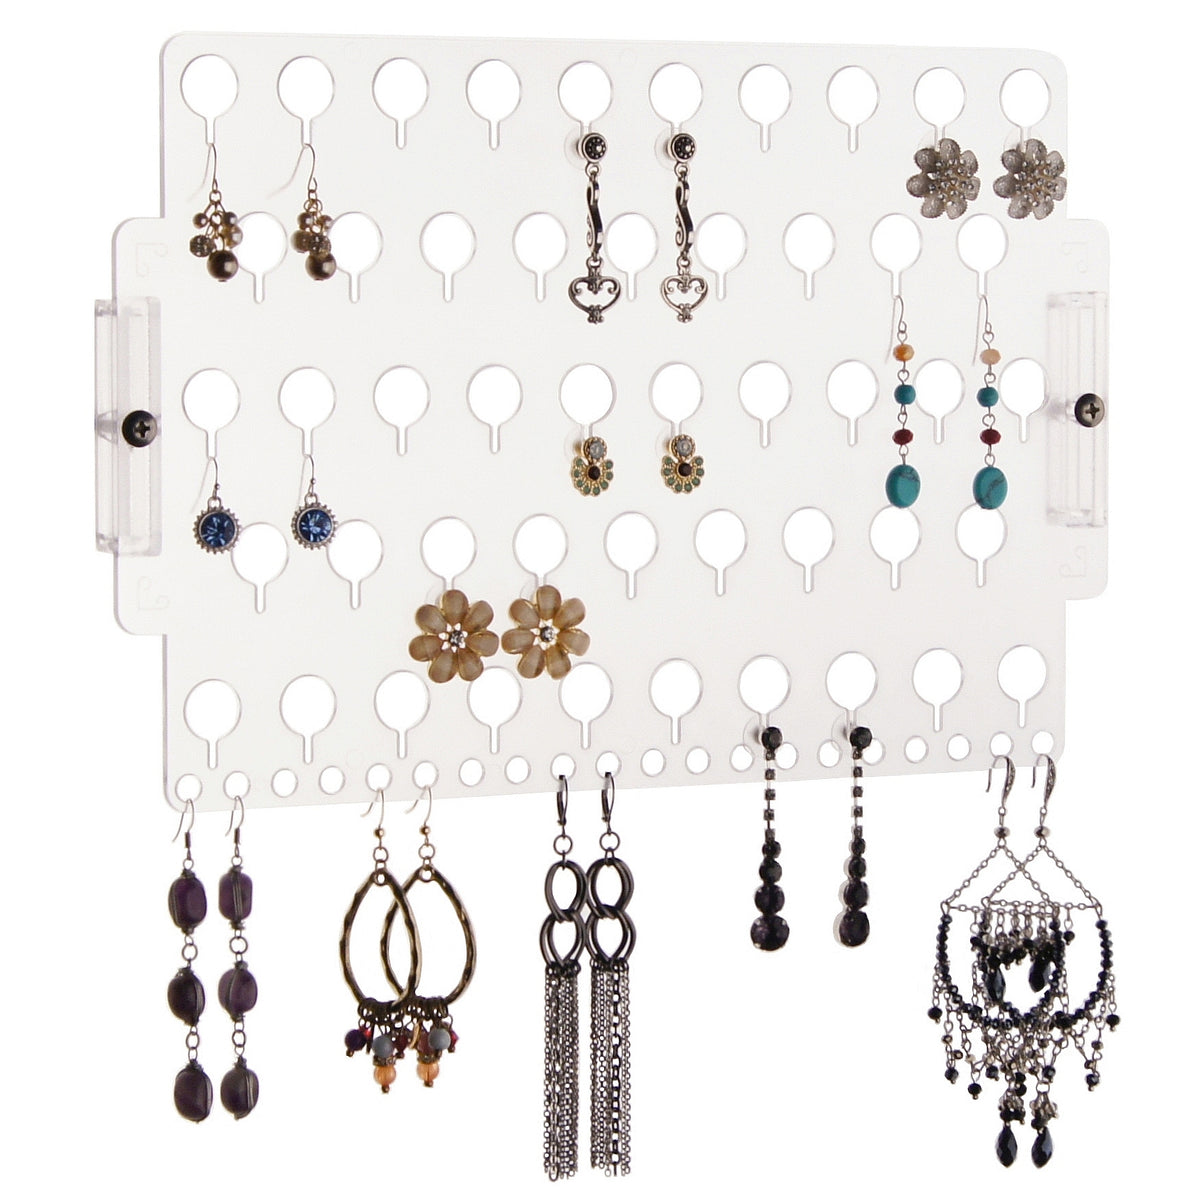 Hanging Earring Holders & Jewelry Organizers – Earring Holder Gallery